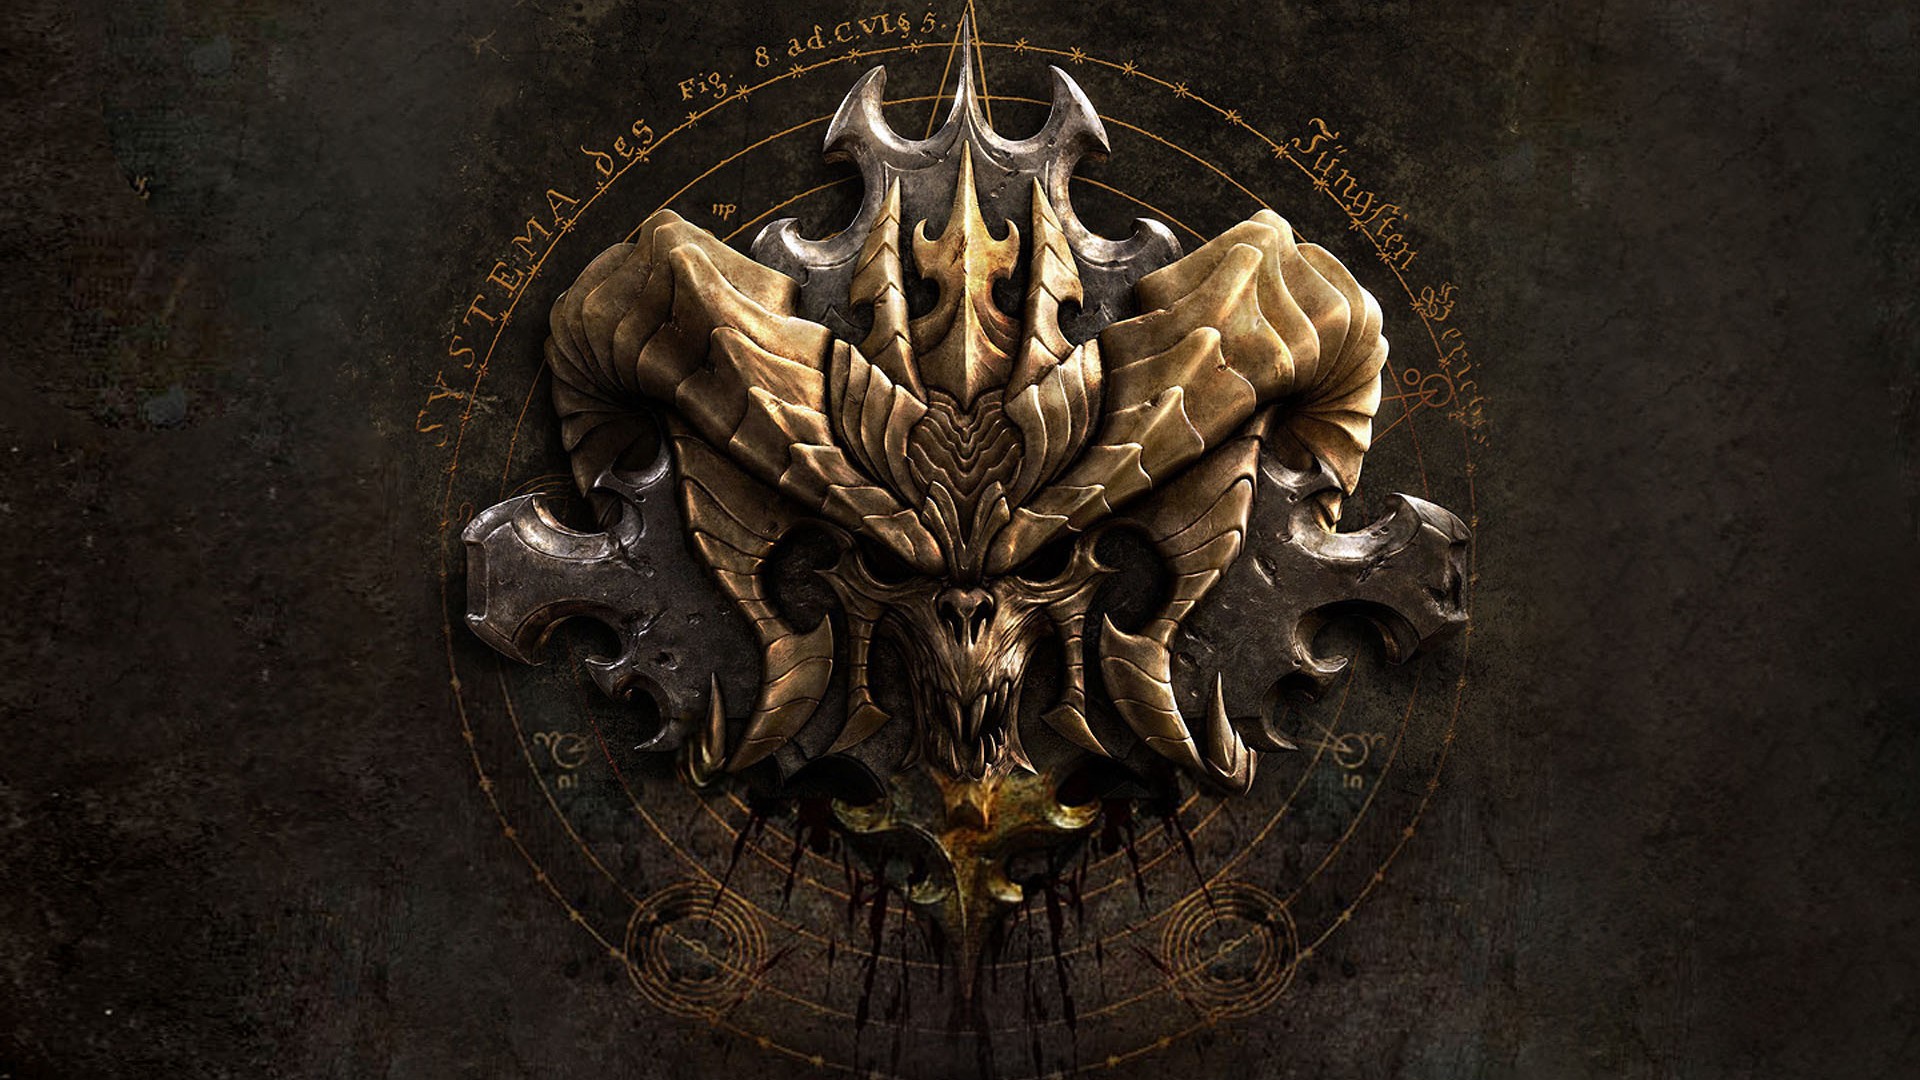 General 1920x1080 Diablo III video games fantasy art skull PC gaming video game art Blizzard Entertainment